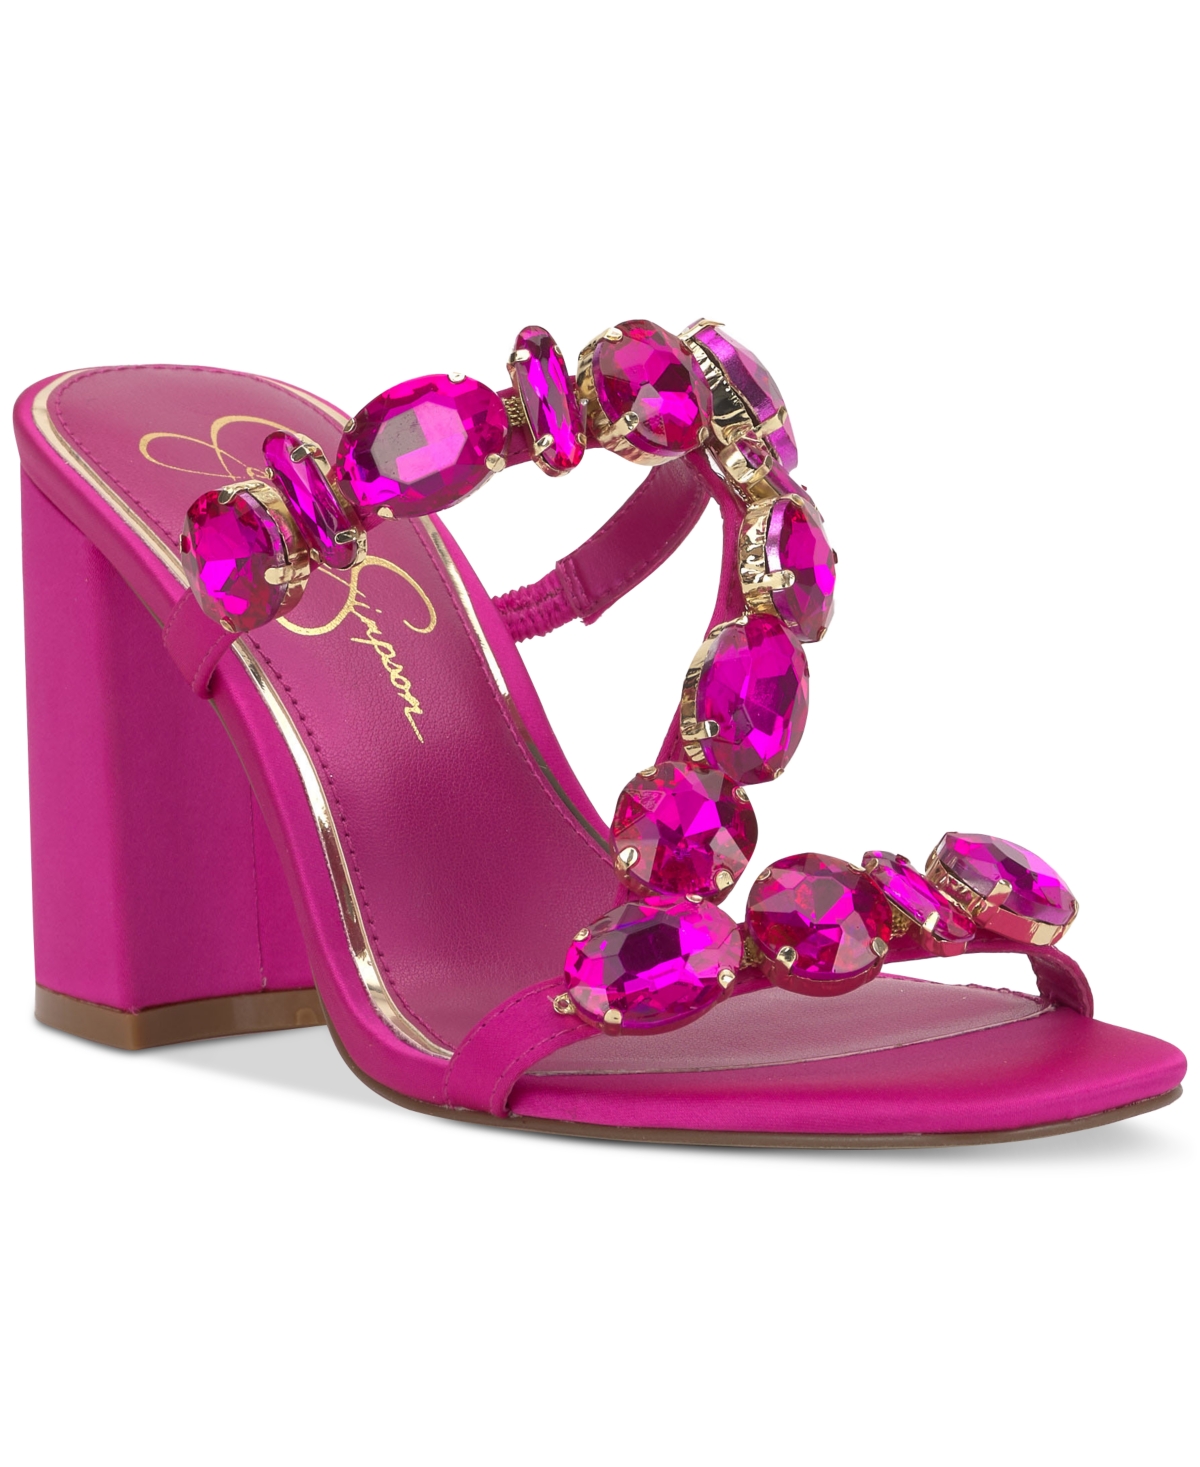 Women's Amilir Embellished Block-Heel Dress Sandals - Bright Pink Satin